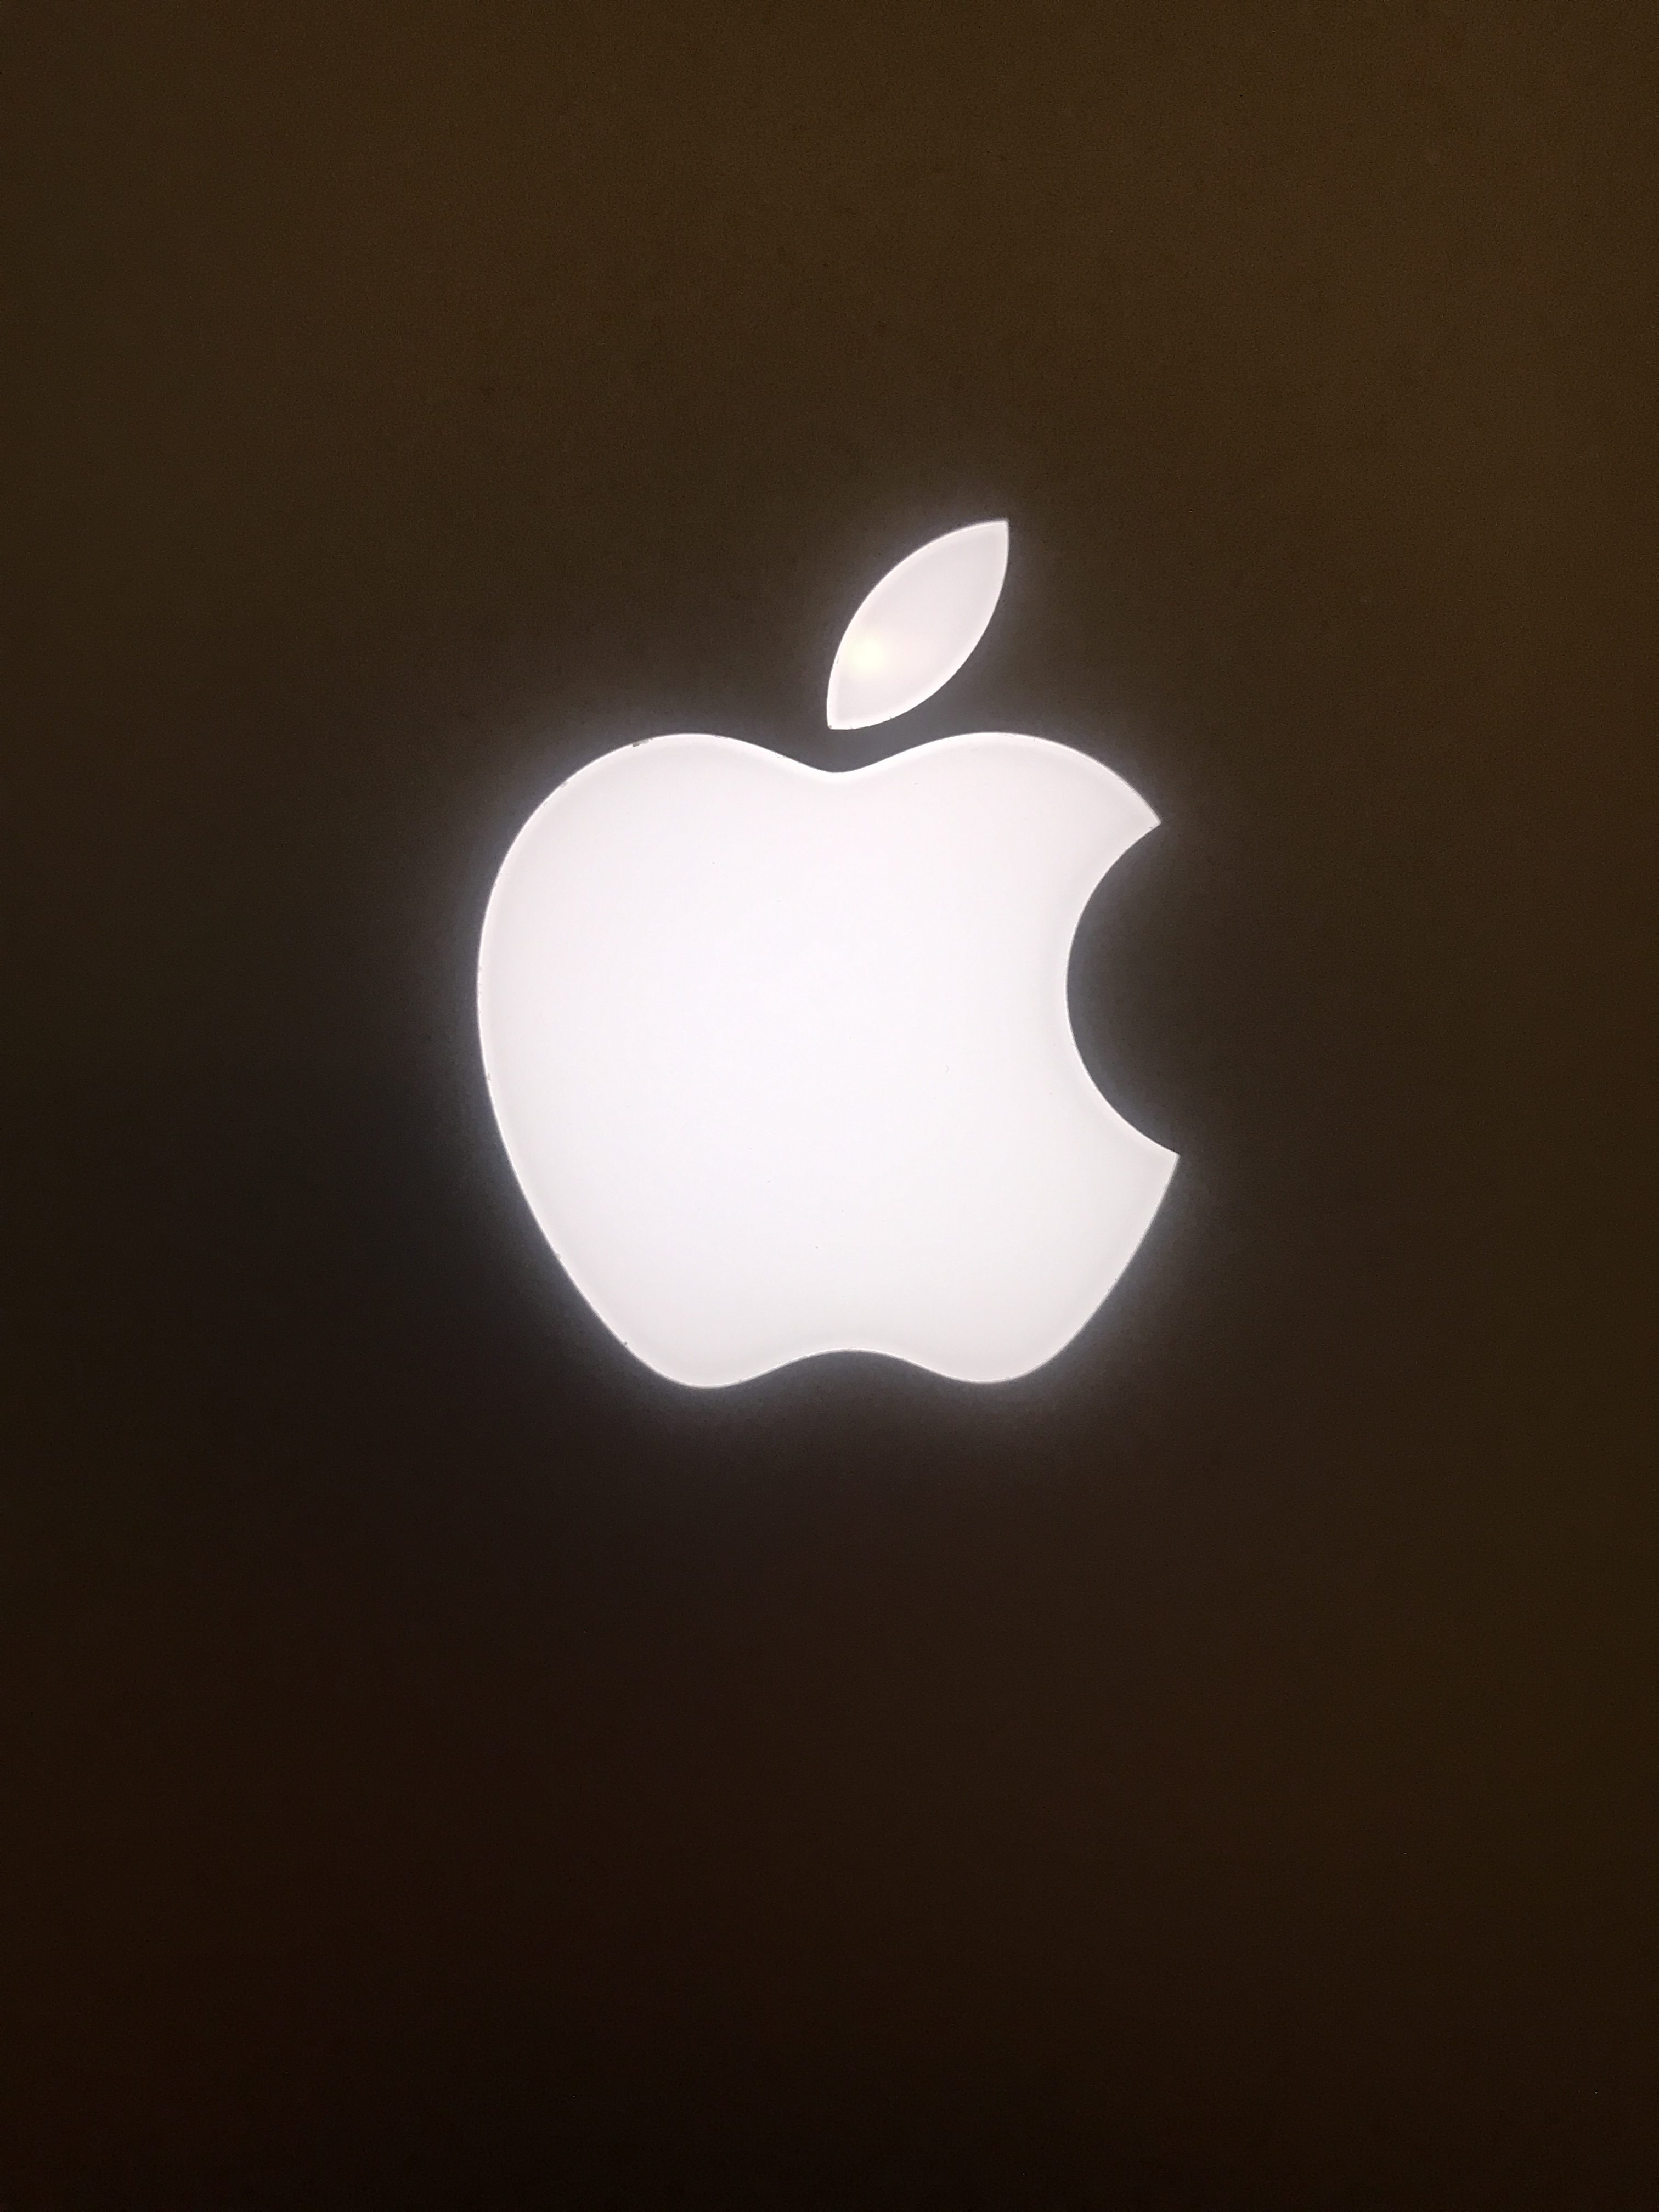 a white apple logo on a black background